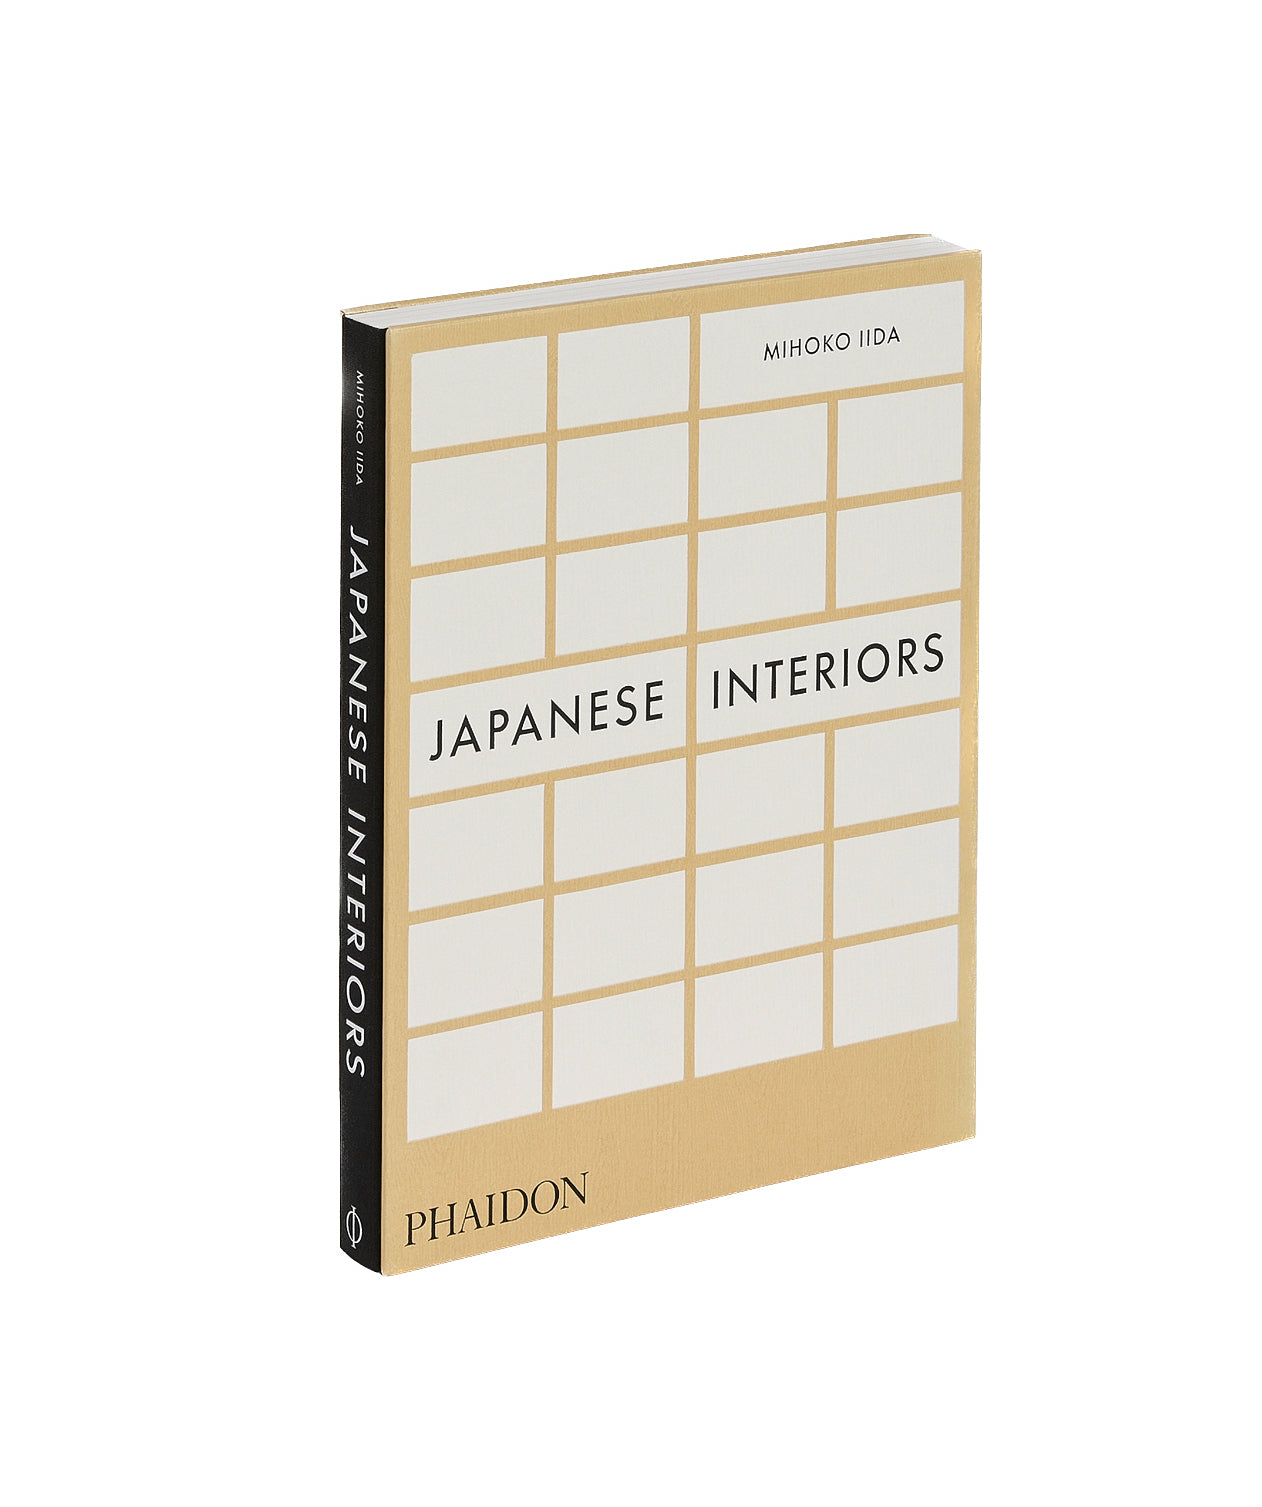 "Intérieurs japonais", Mihoko Iida